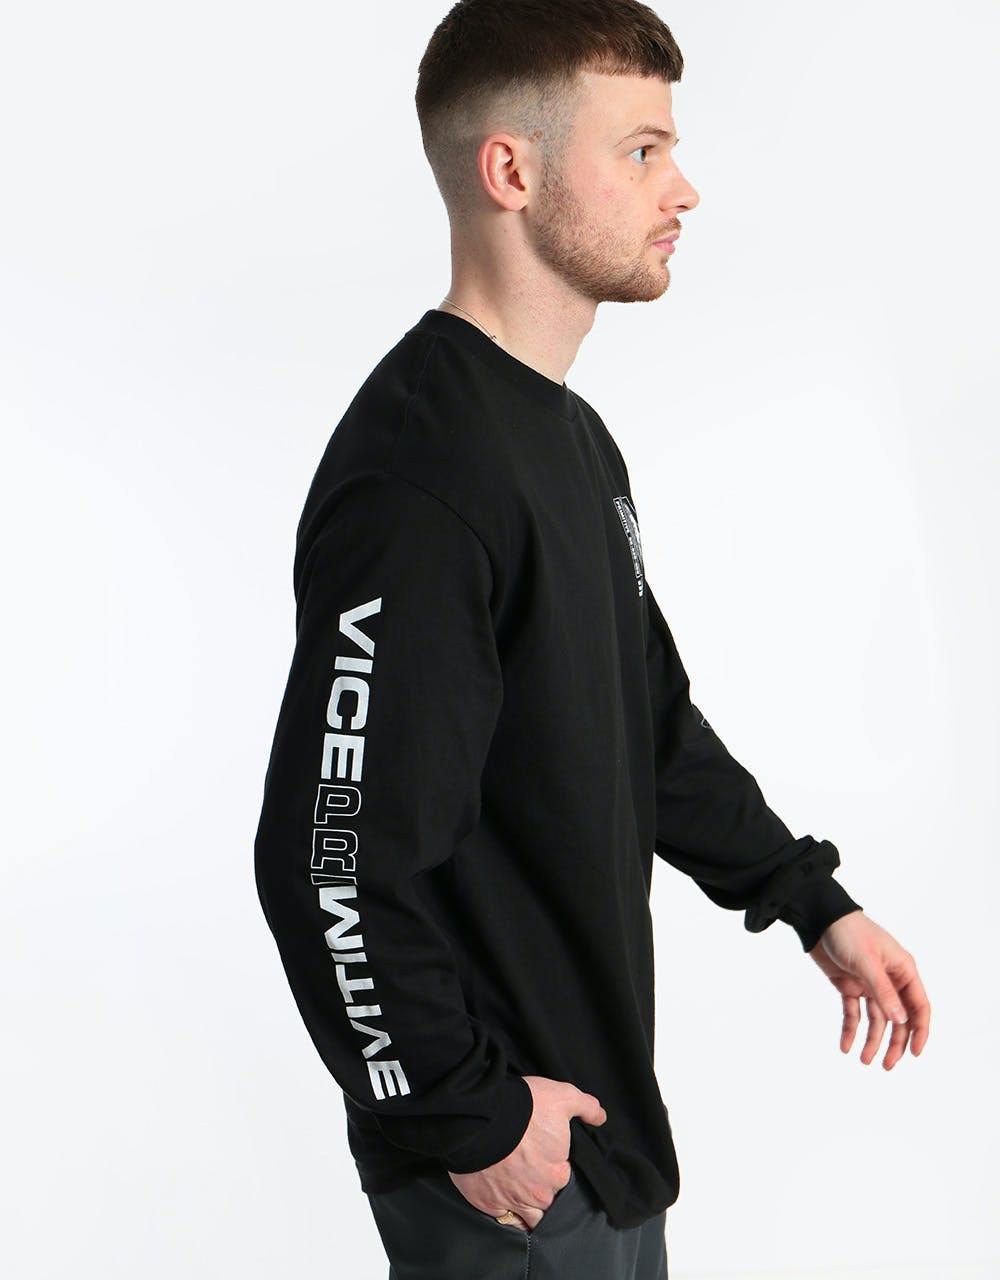 Primitive x Vice Feed L/S T-Shirt - Black